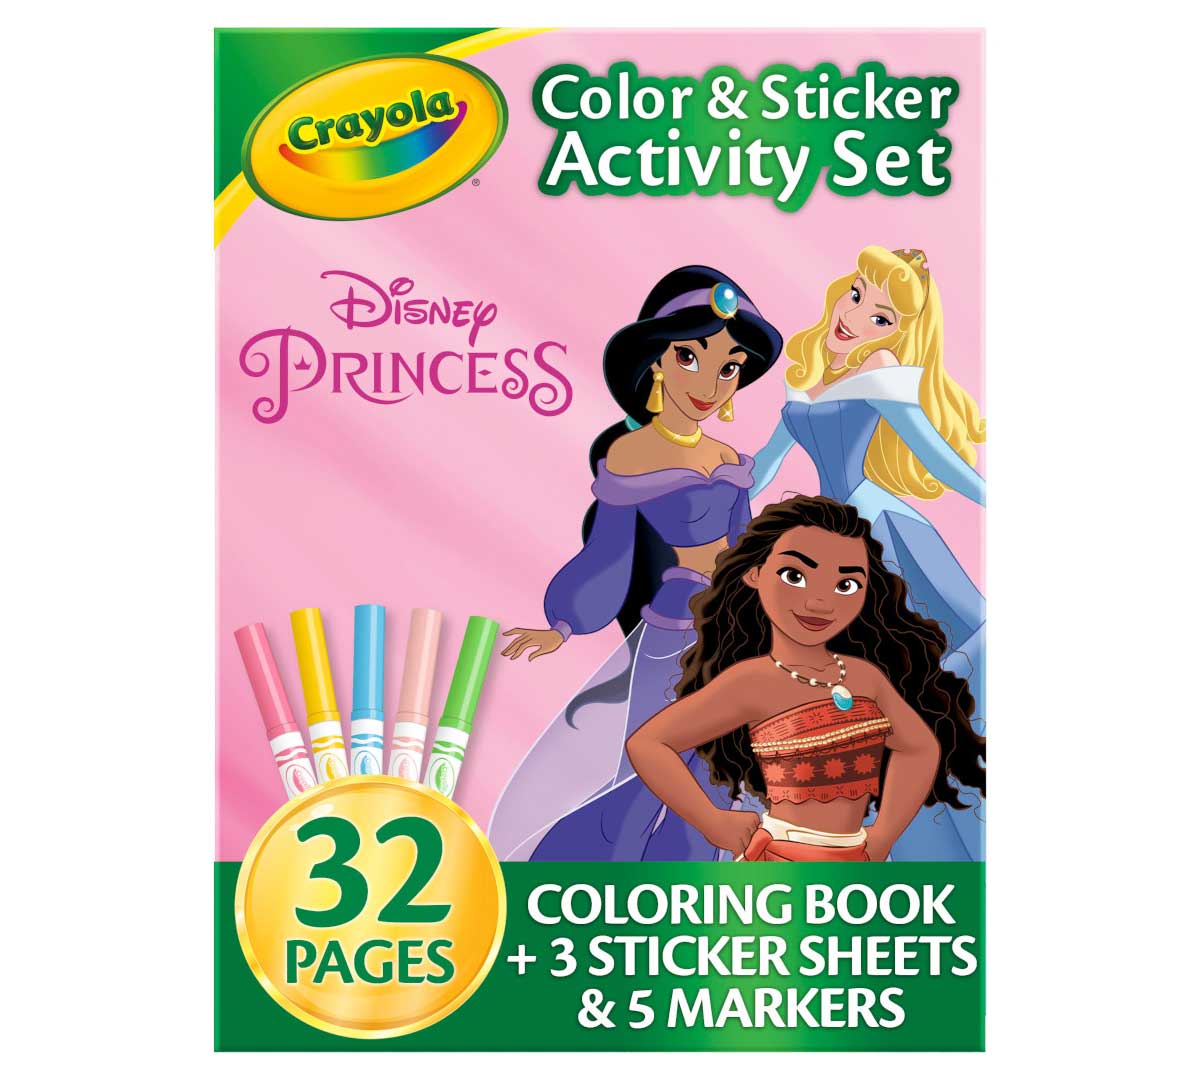 Clever Ways to Organize Kids STUFF! - Princess Pinky Girl